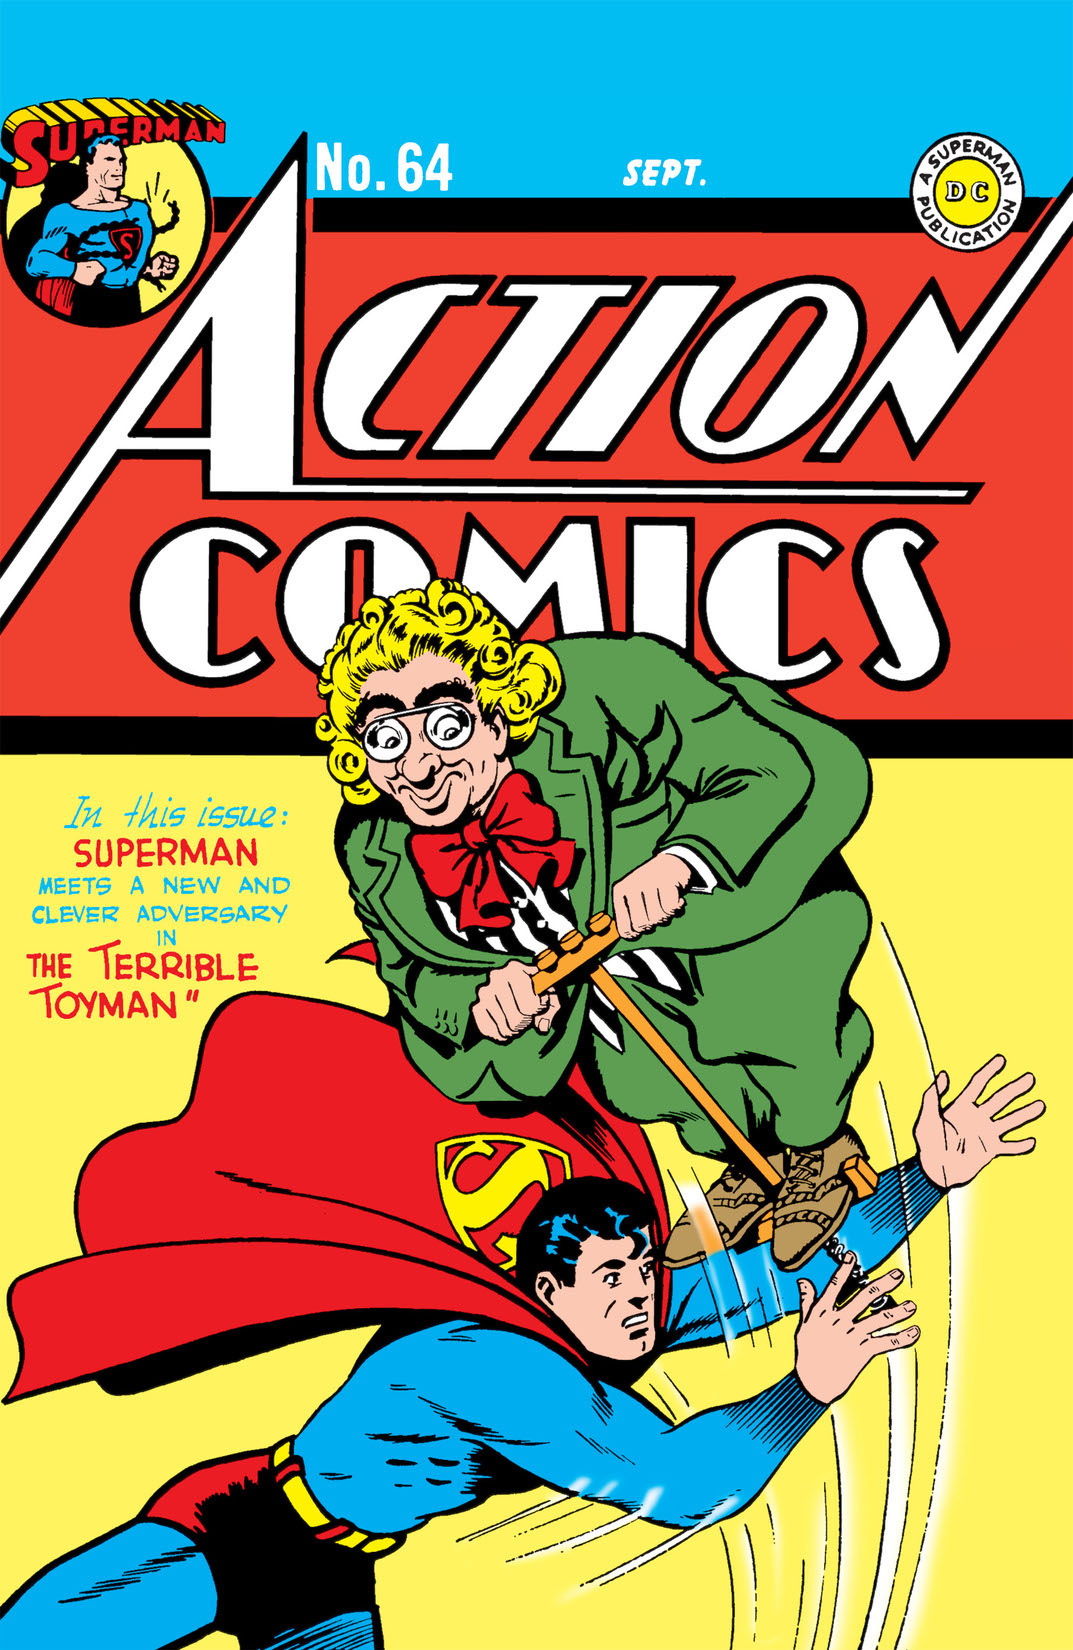 Action Comics (1938-) #64 preview images